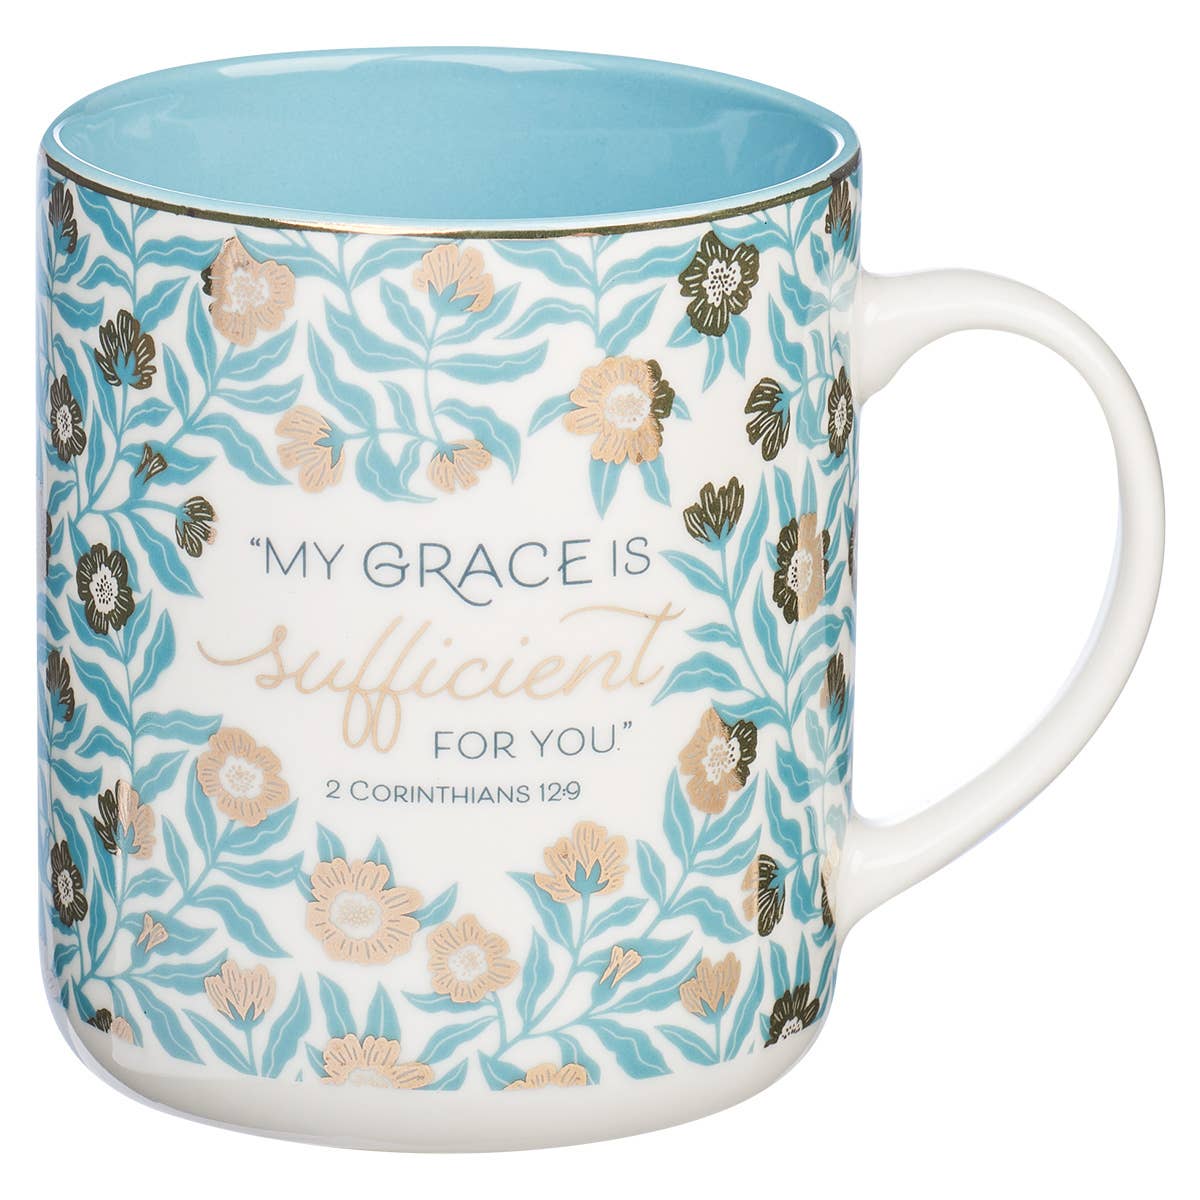 My Grace Is Sufficient Coffee Mug - 2 Corinthians 12:9